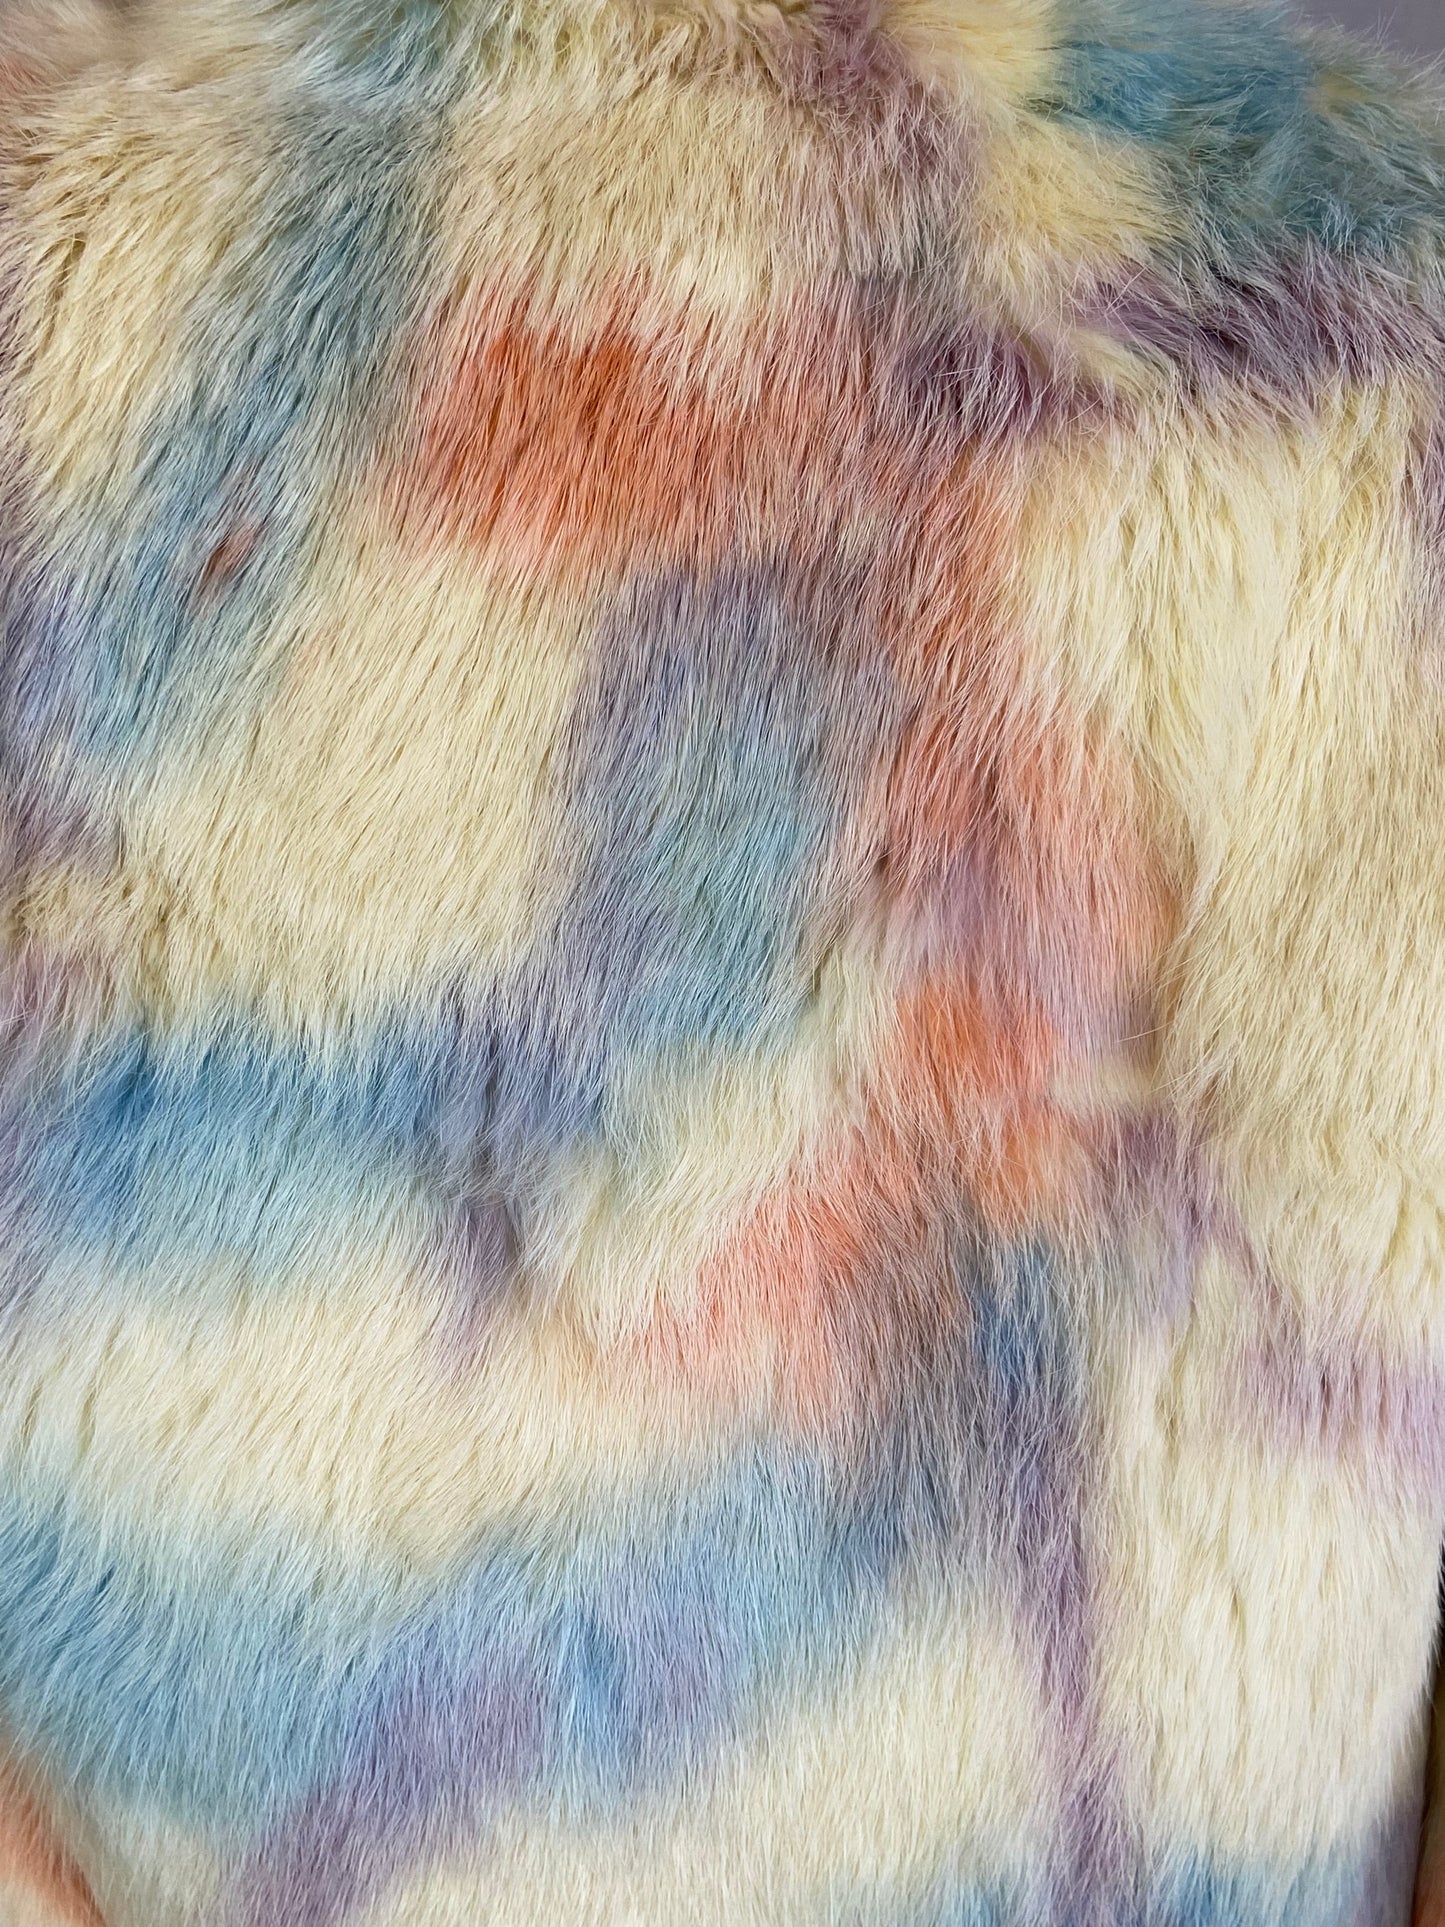 Vintage Comex Rainbow Tie Dye Fur Coat